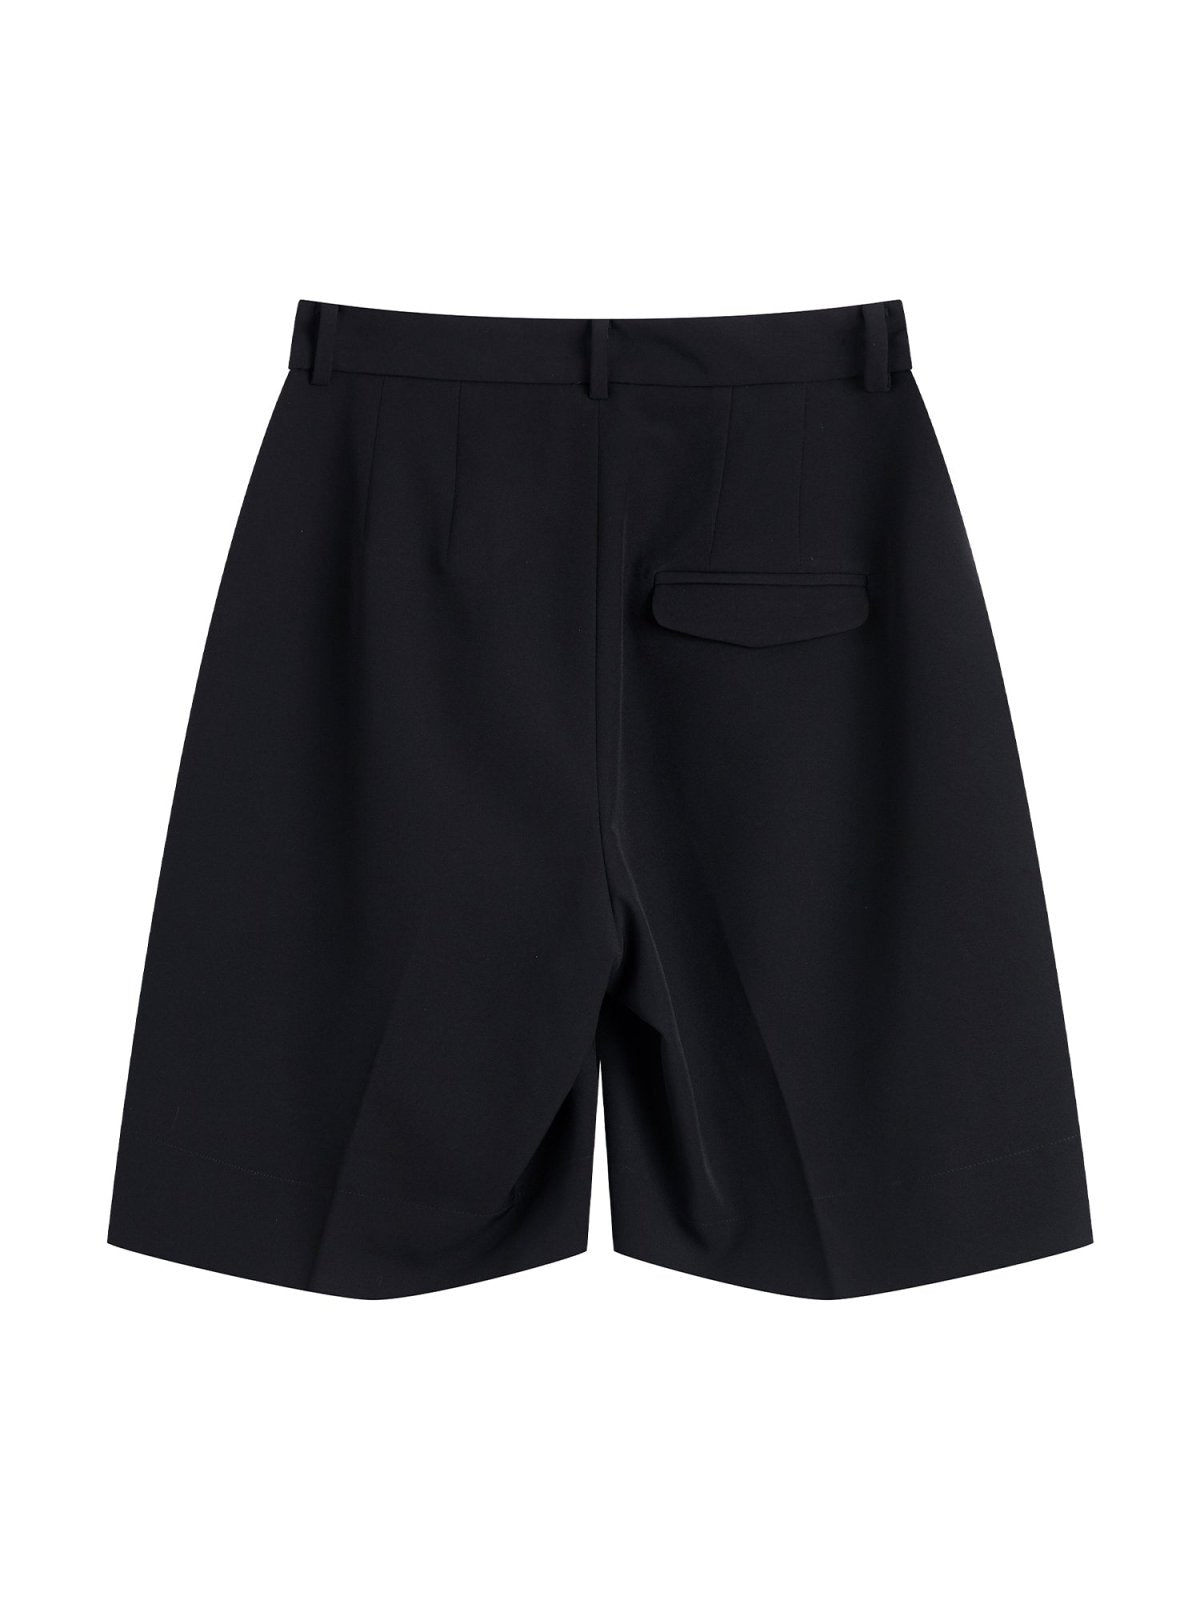 Masculine Bermuda Shorts - DAG-DD7859-21BlackS - Black - S - D'ZAGE Designs